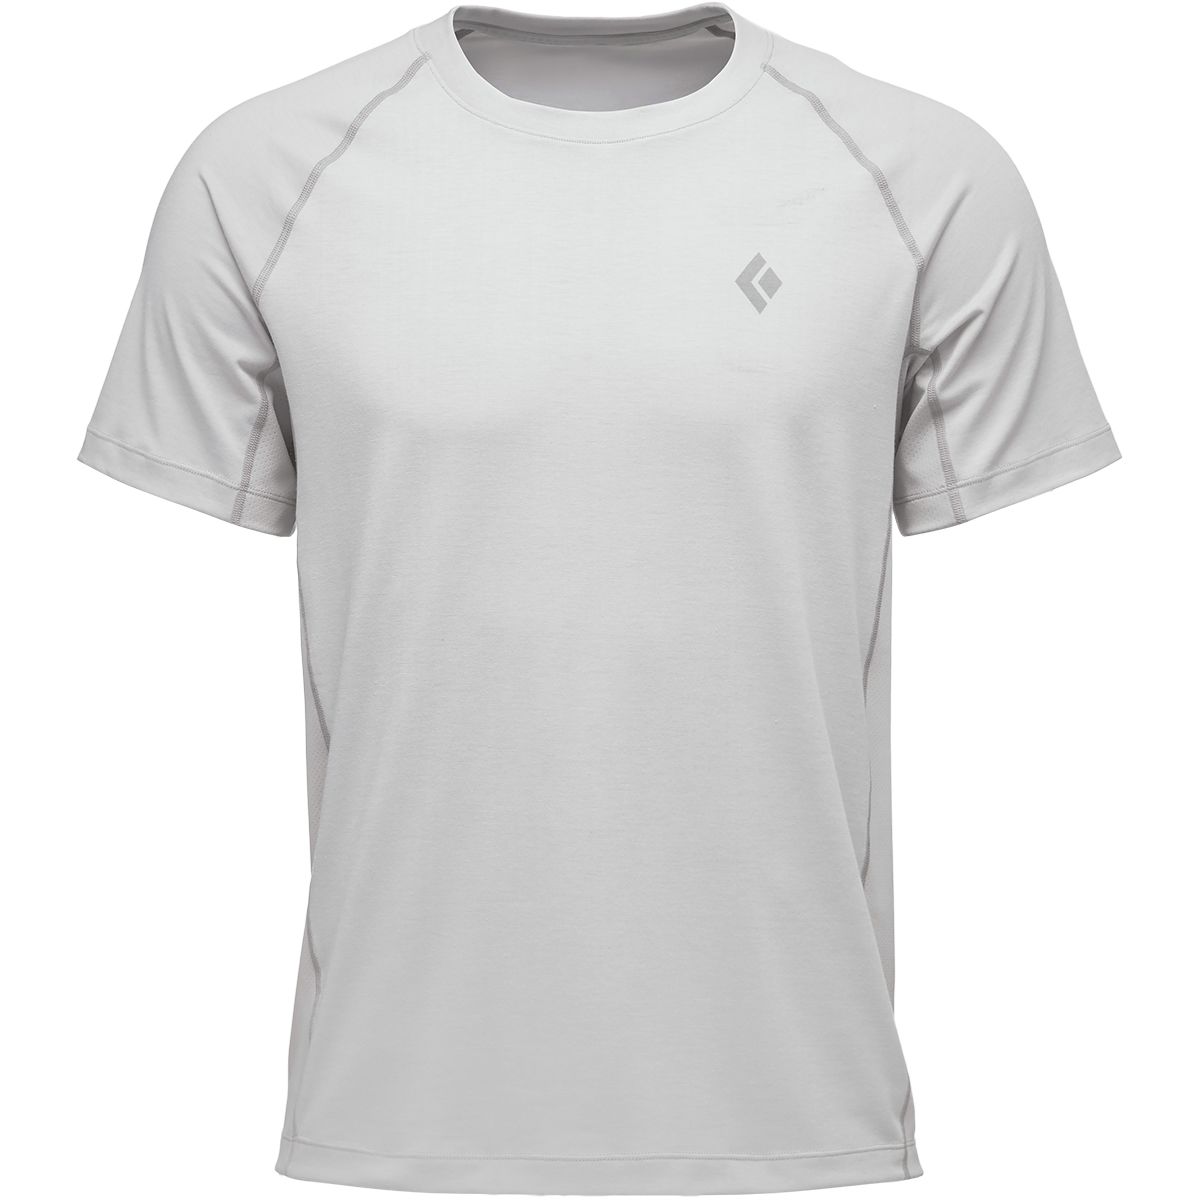 Black Diamond Warbonnet Short-Sleeve T-Shirt - Men's Aluminum L